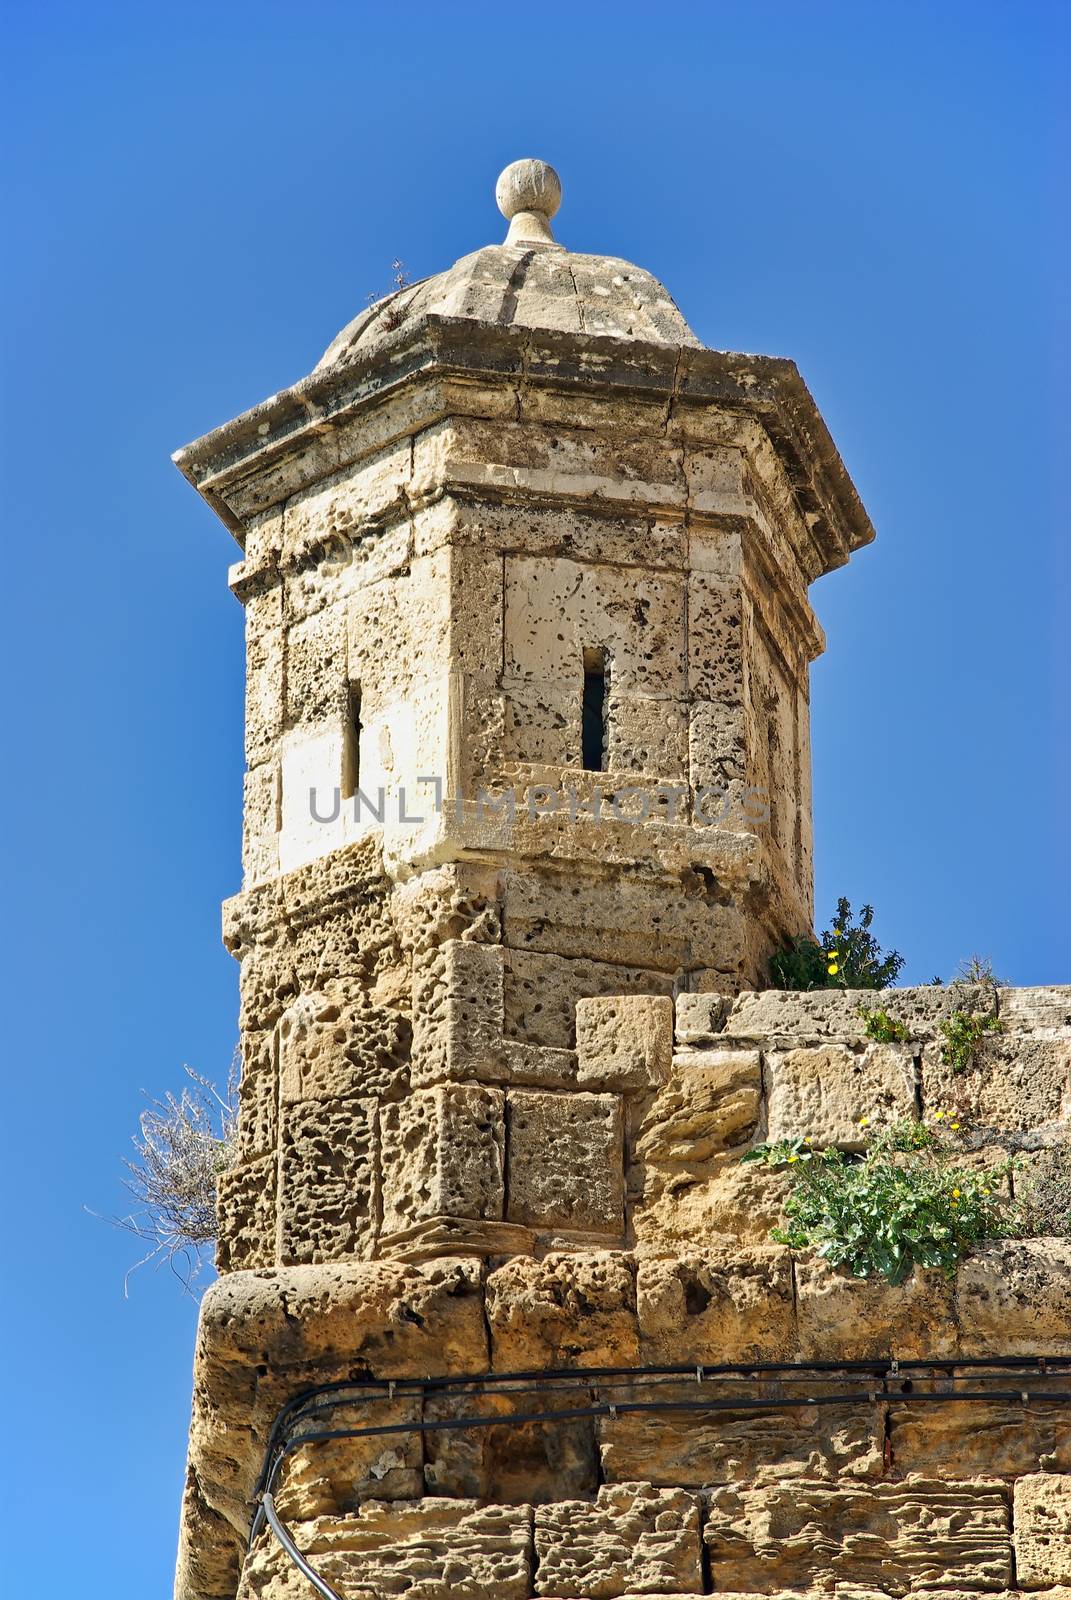 Ancient medieval surveillance tower in Palma de Mallorca (Spain)